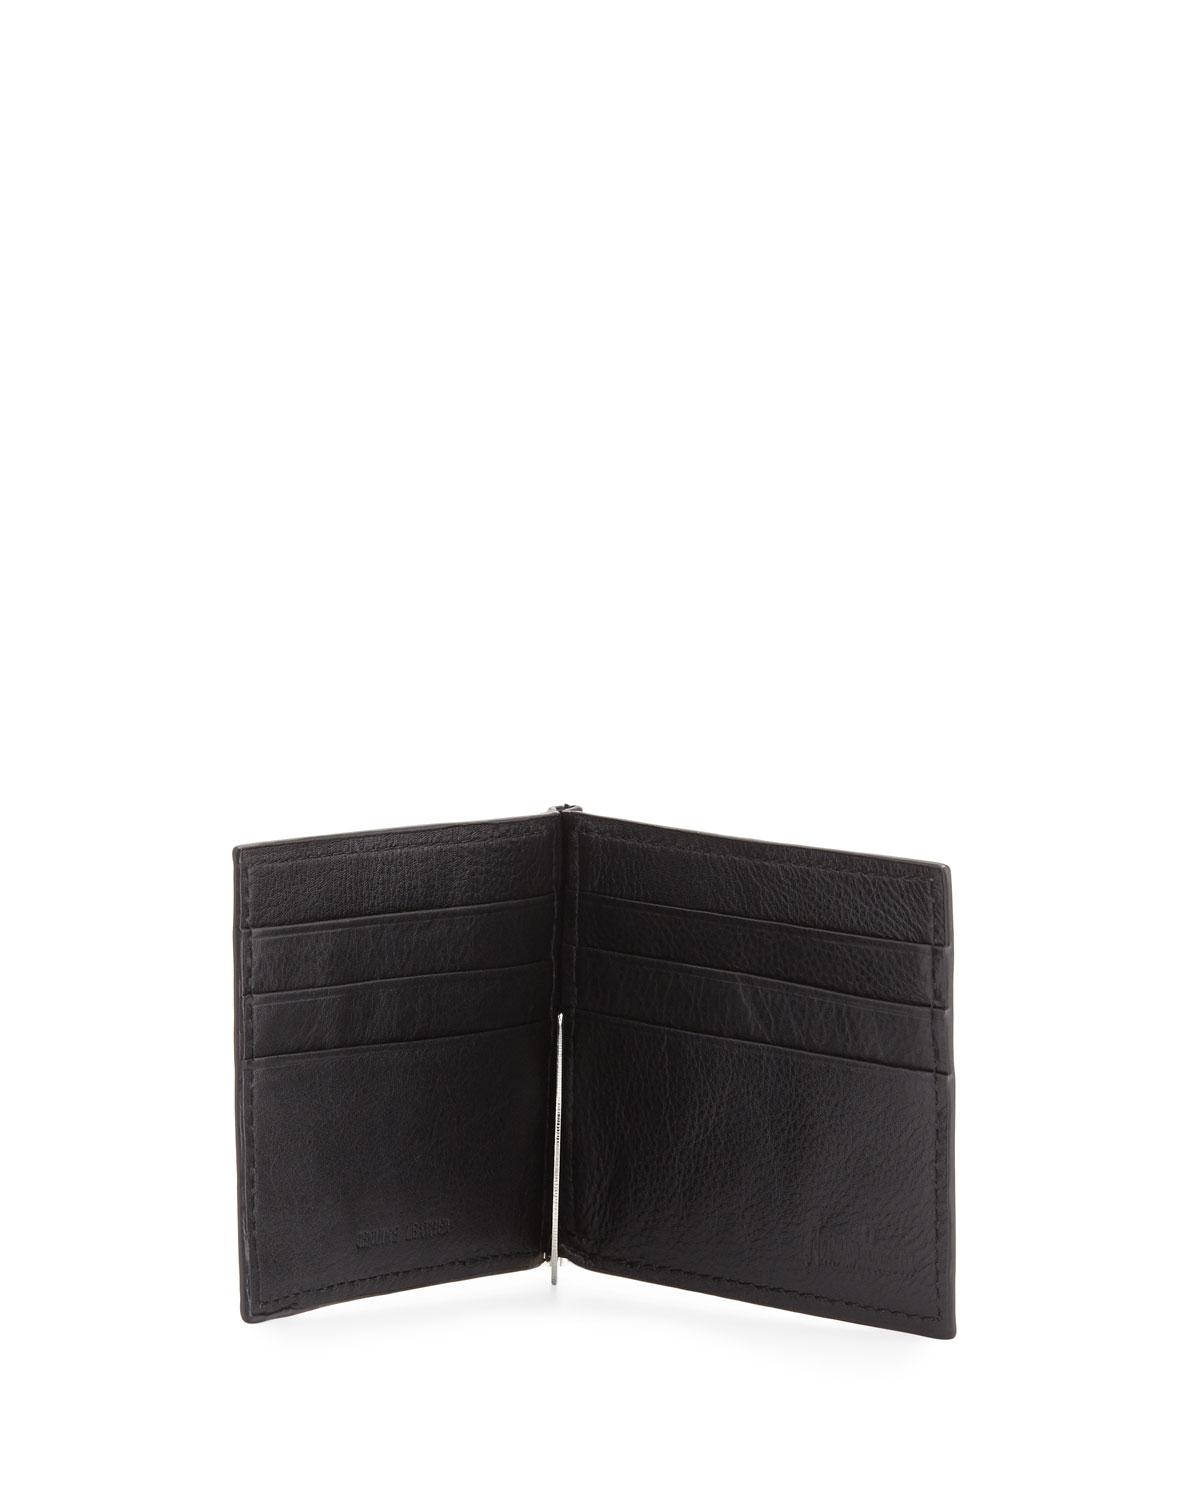 Lyst - Neiman Marcus Money-clip Bi-fold Wallet in Black for Men